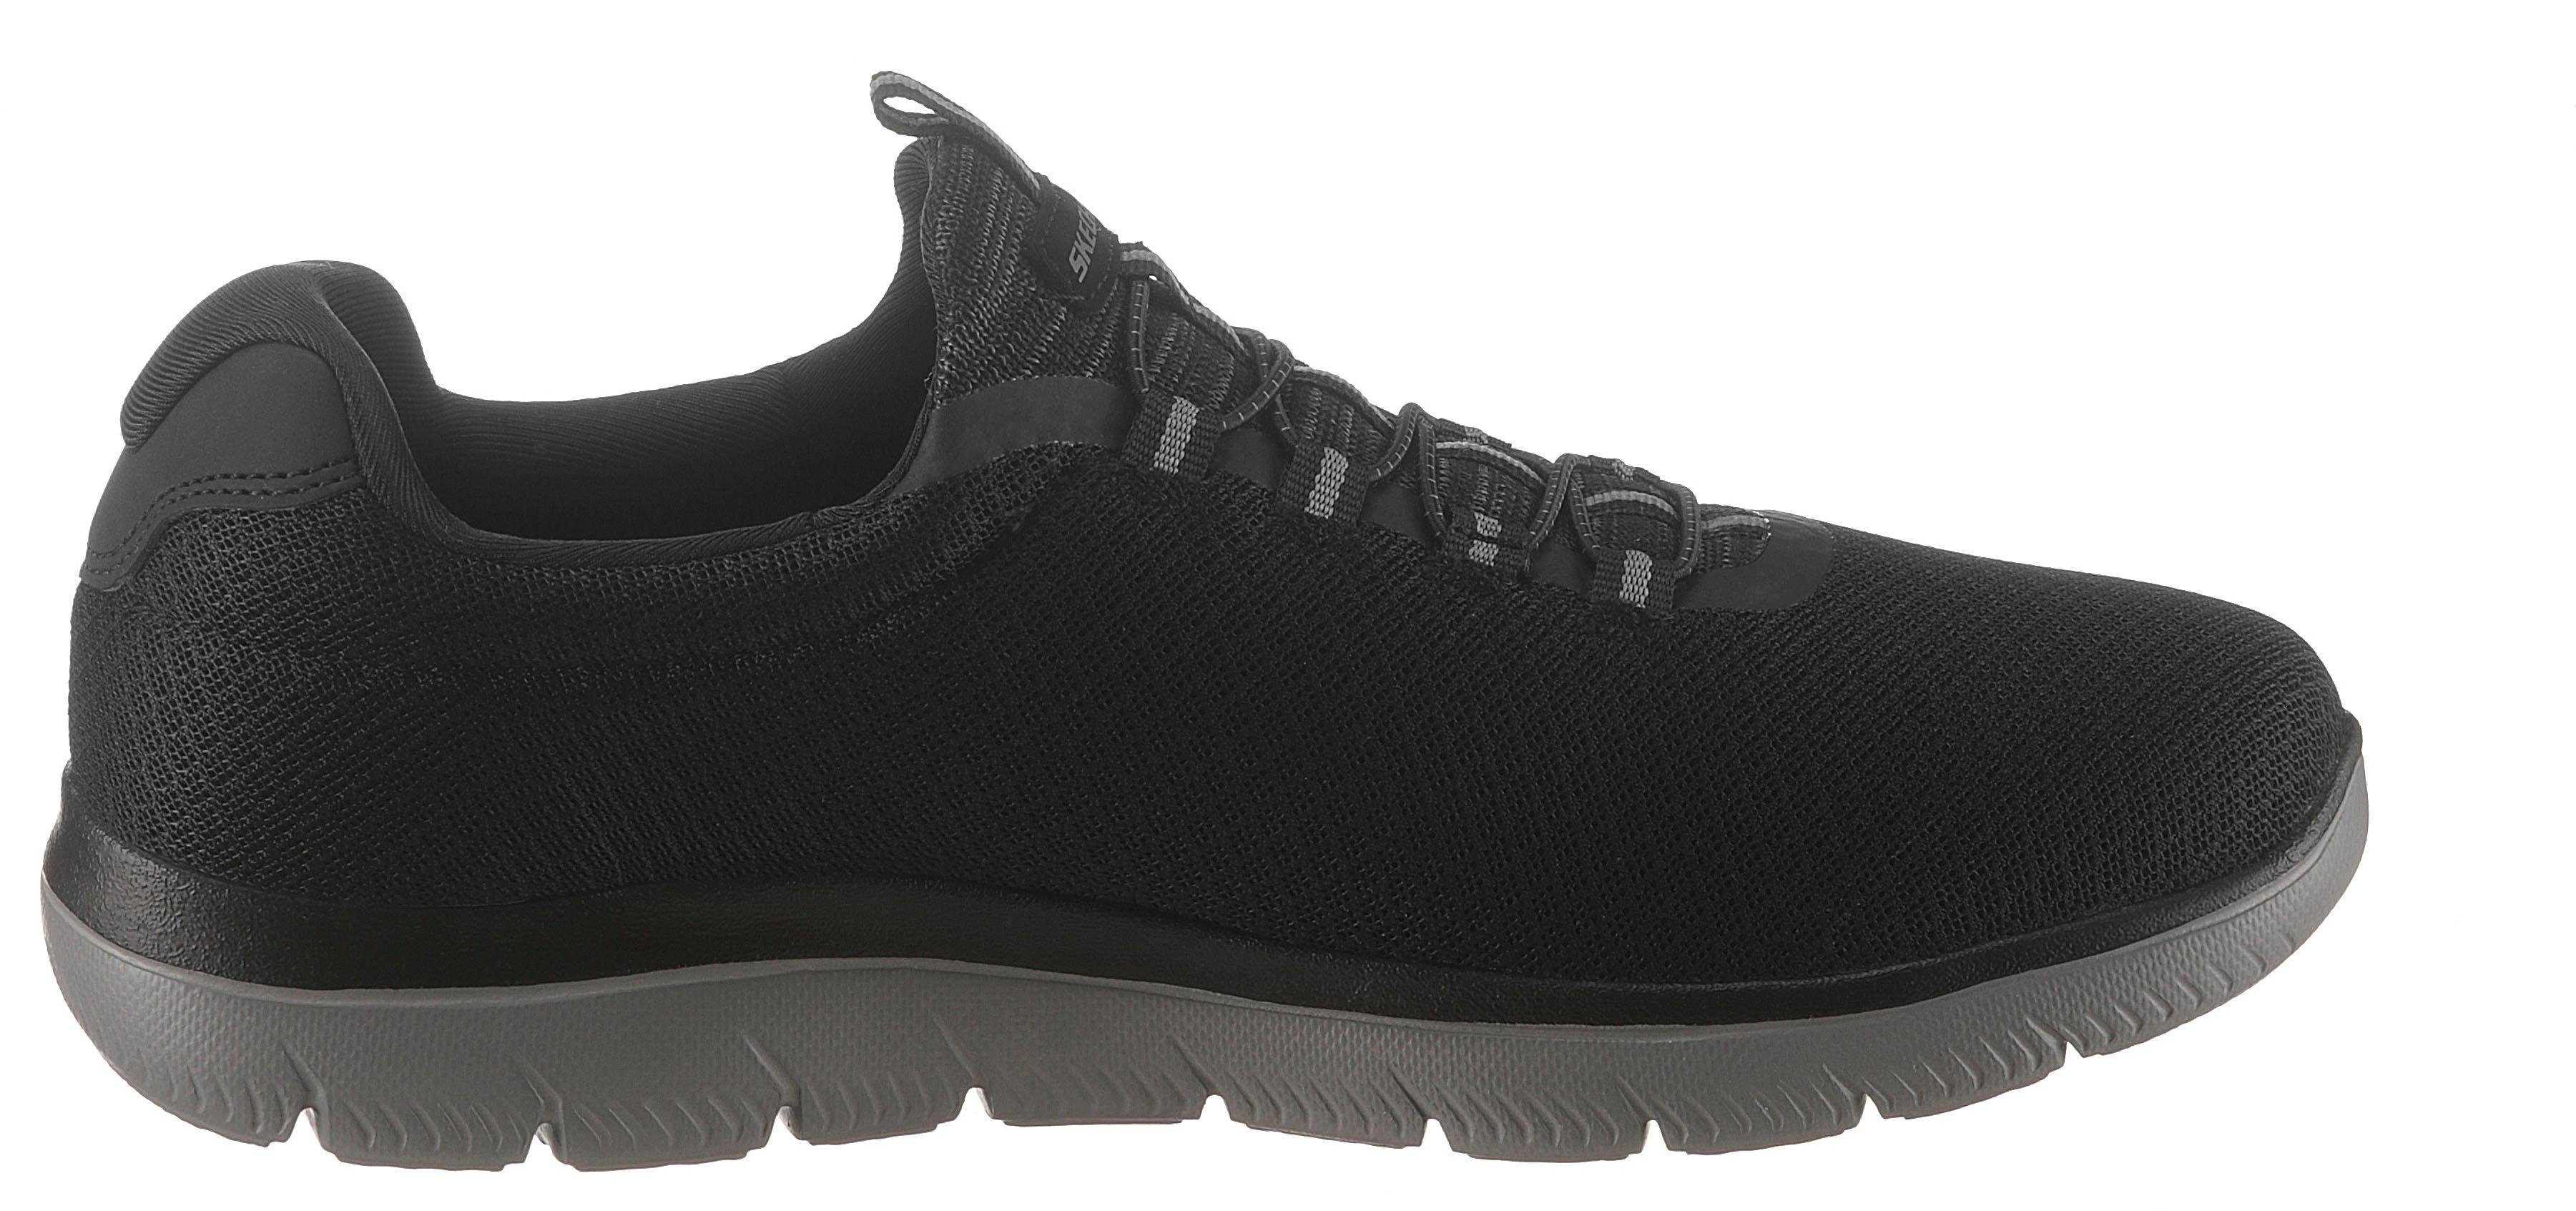 Skechers Summits Sneaker Slip-On Foam-Ausstattung black/charcoal Memory mit komfortabler